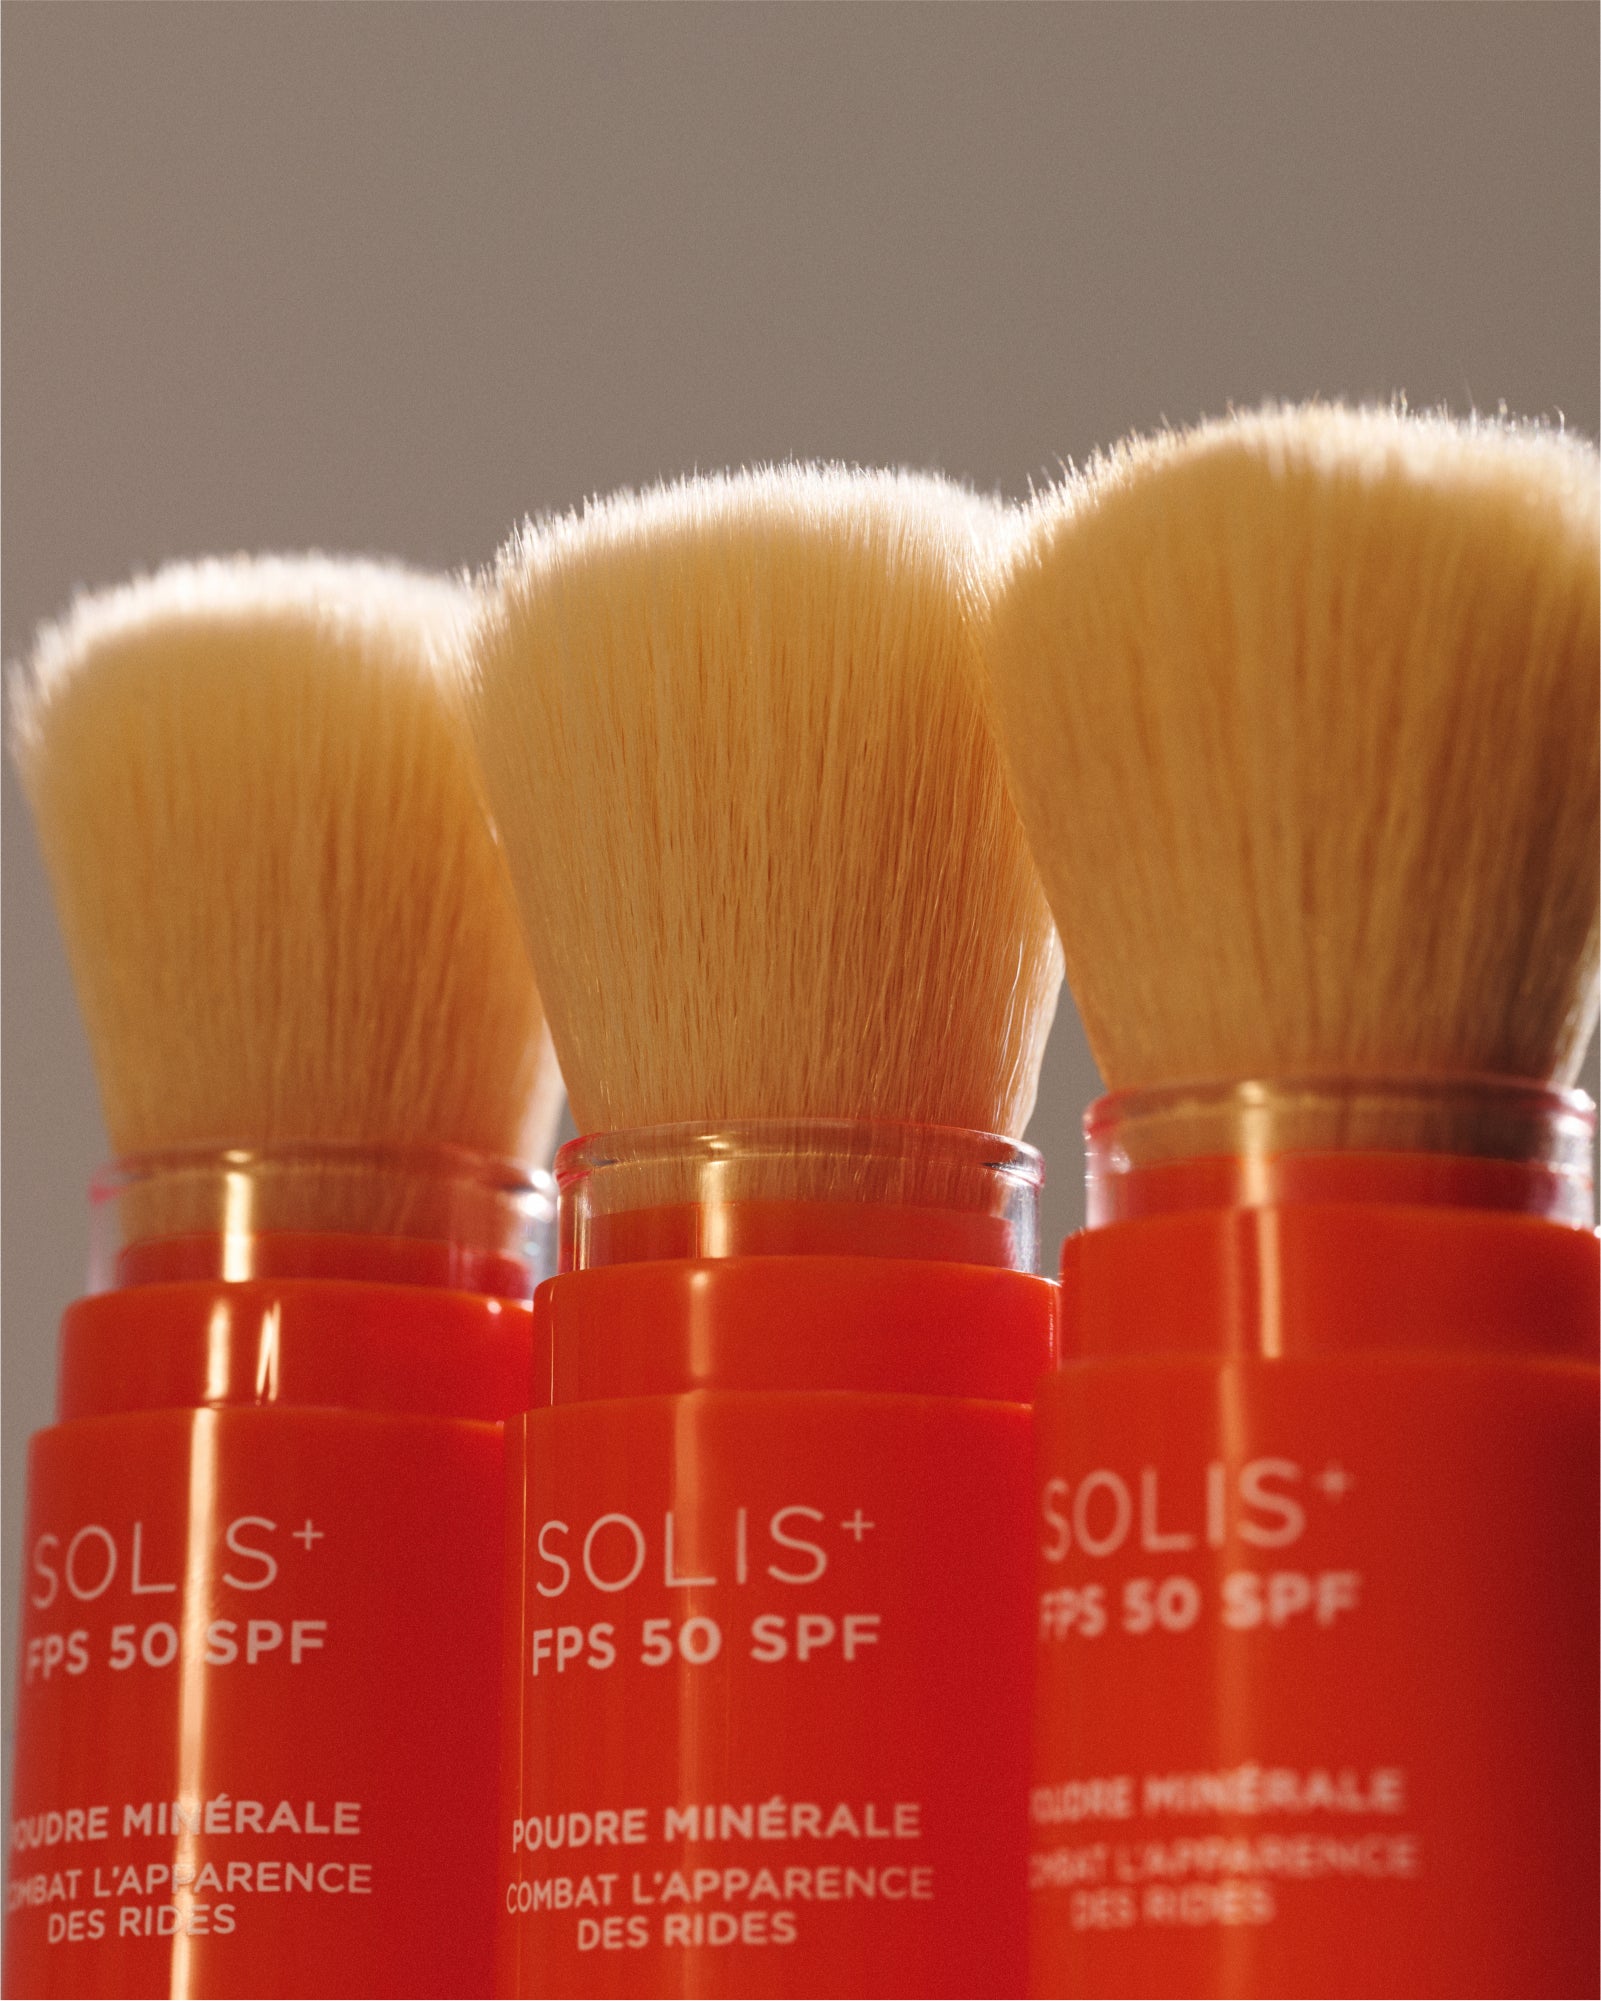 Solis+ SPF 50 | Mineral Powder Sunscreen